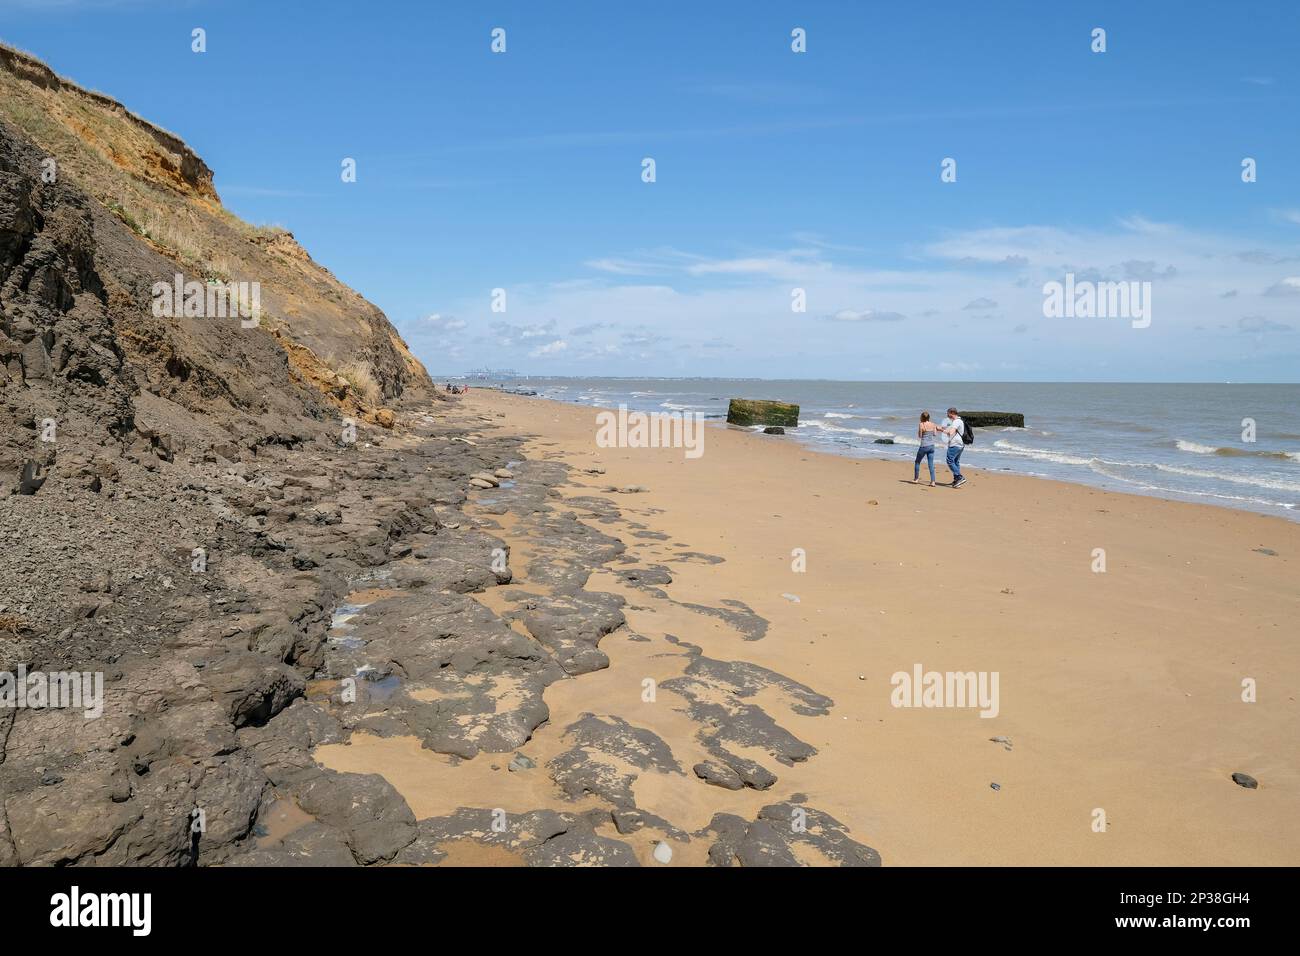 Coastal erosion/slumping on the beach at Walton-on-the-Naze, Essex, UK. Stock Photo